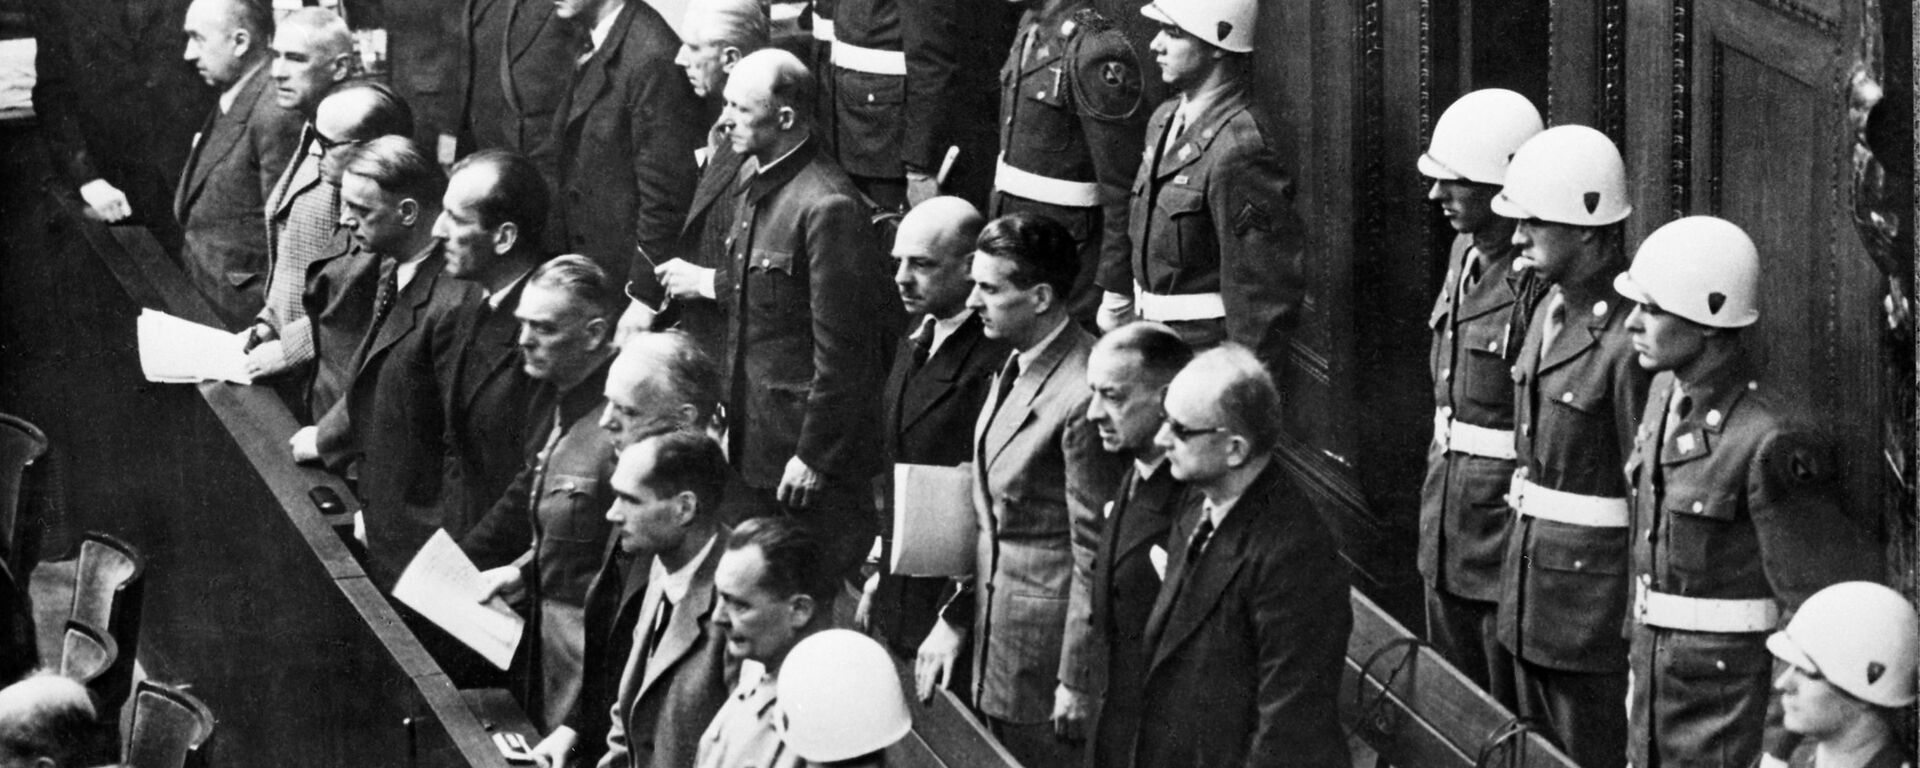 Нюрнбергский процесс (20 ноября 1945 г. - 1 октября 1946 г.) - Sputnik Latvija, 1920, 09.05.2021